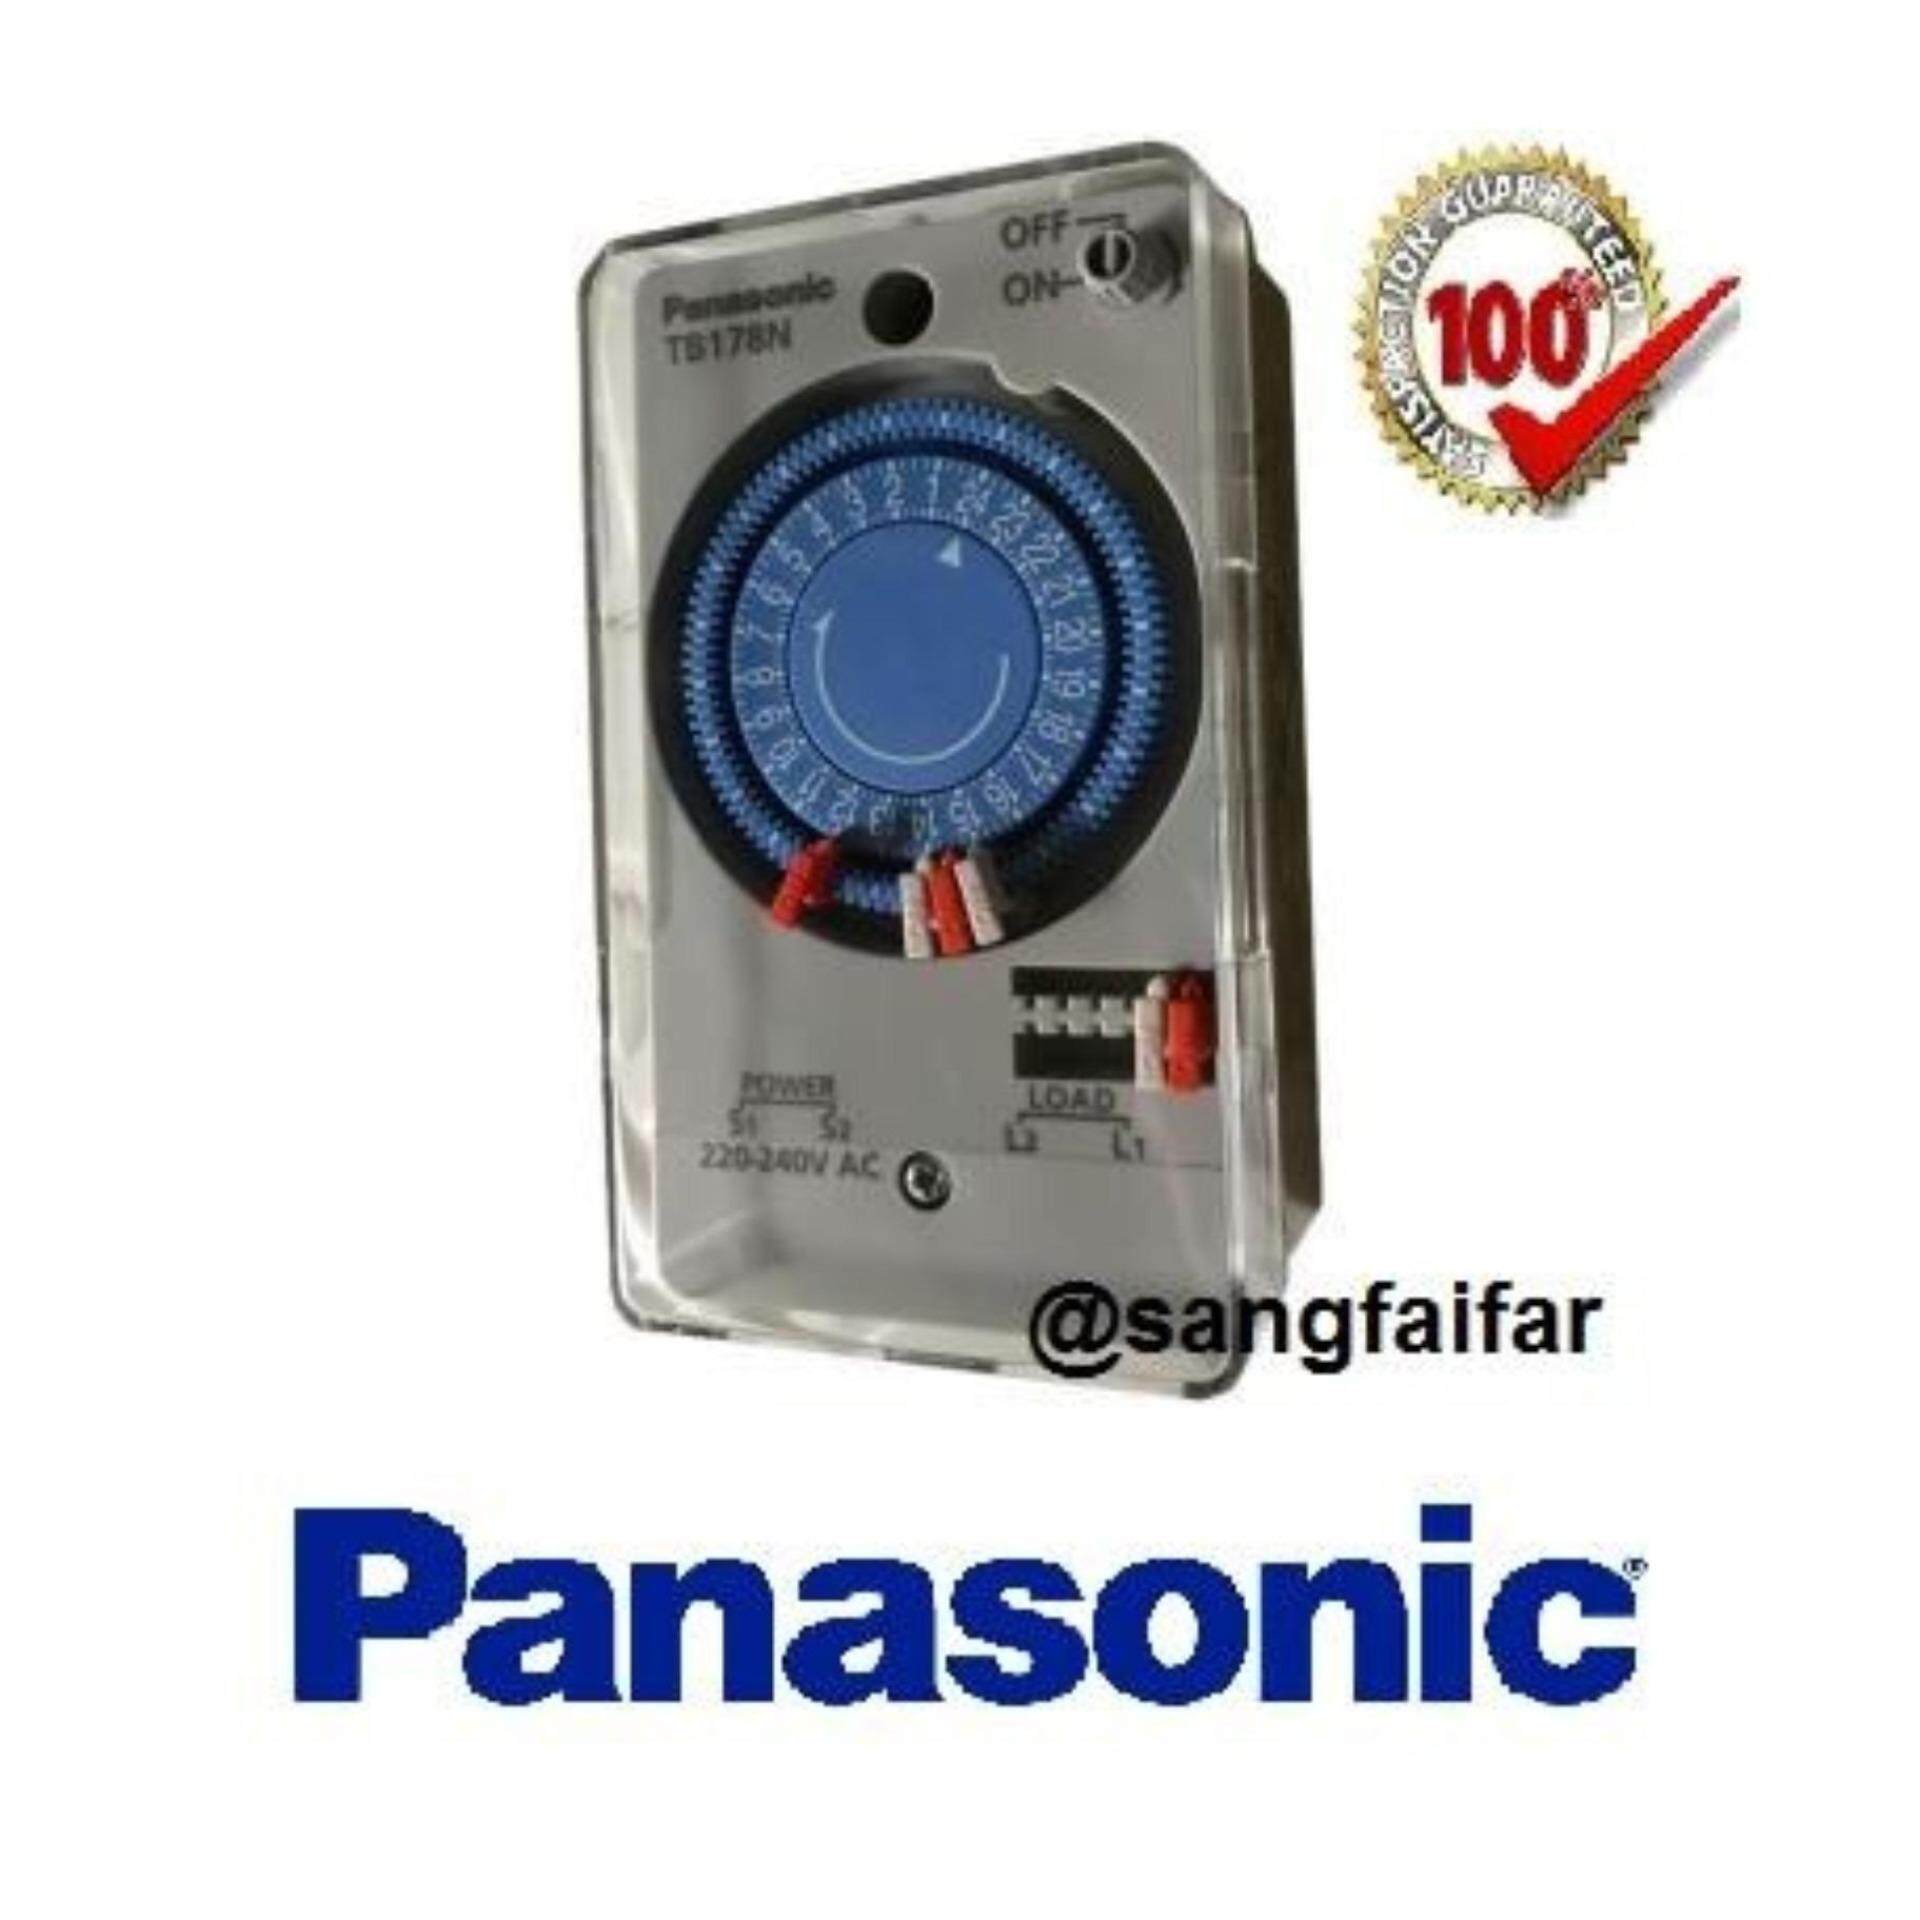 PANASONIC TIMER SWITCH สวิทช์ตั้งเวลา เครื่องตั้งเวลา นาฬิกาตั้งเวลา พานาโซนิค รุ่น 178NE5T เปิด-ปิดไฟ 24ชั่วโมง